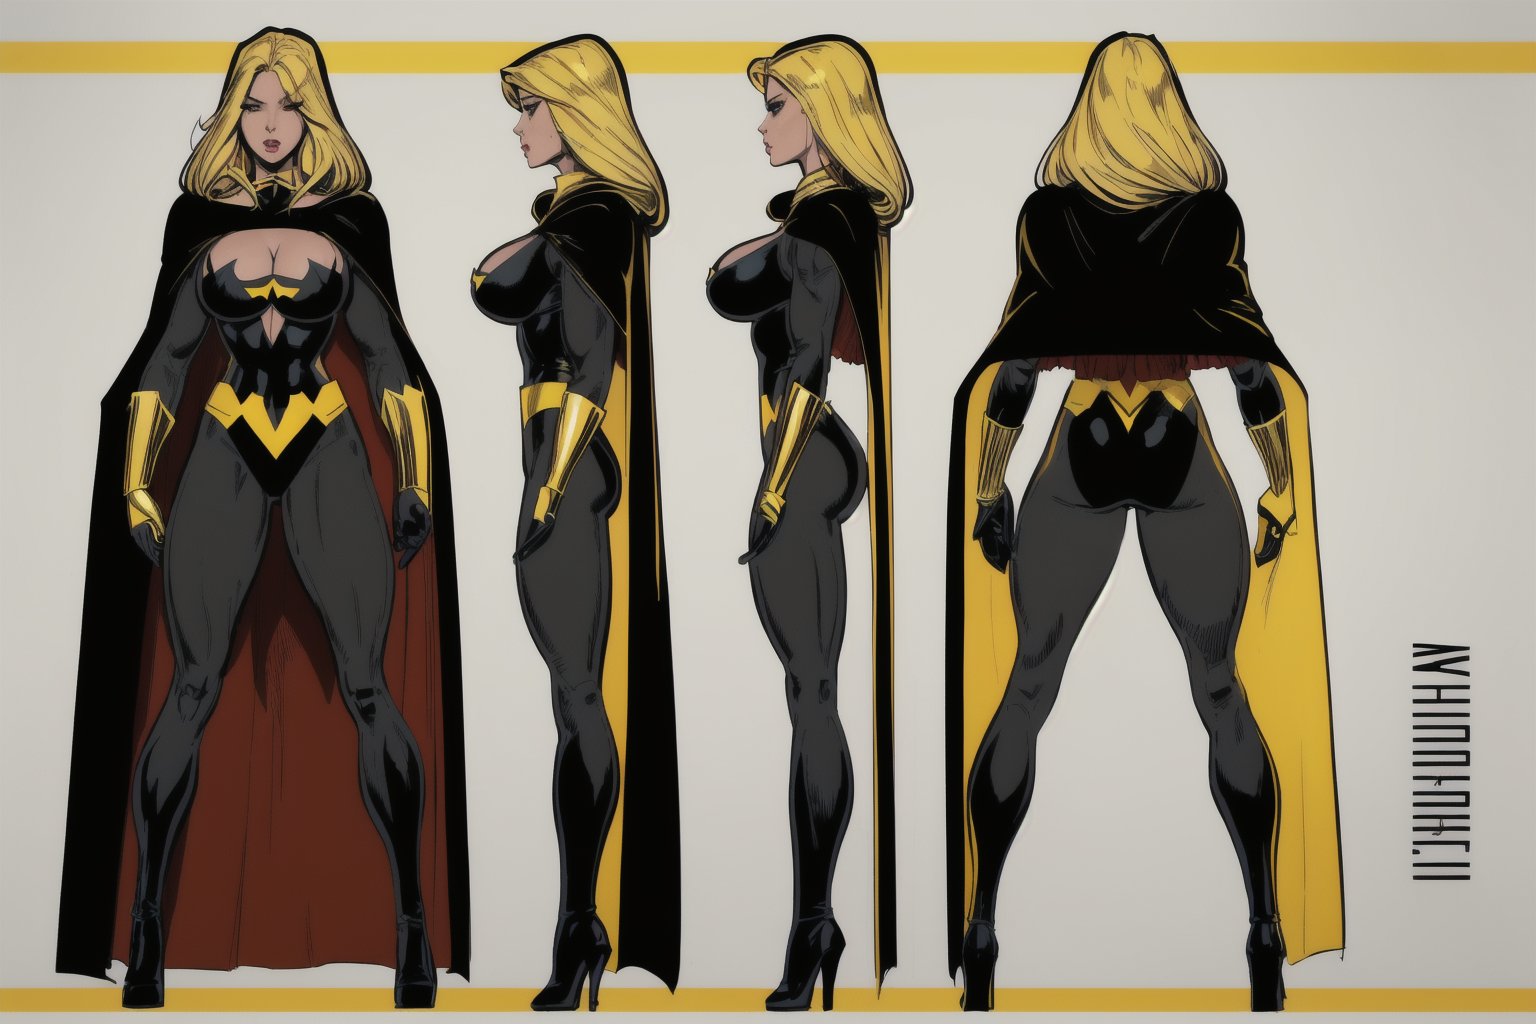 woman, superheroine, blonde long hair, yellow and black superheroe costume, cape, high heels, cleavage cutout, reference sheet, 3 views,PoP art